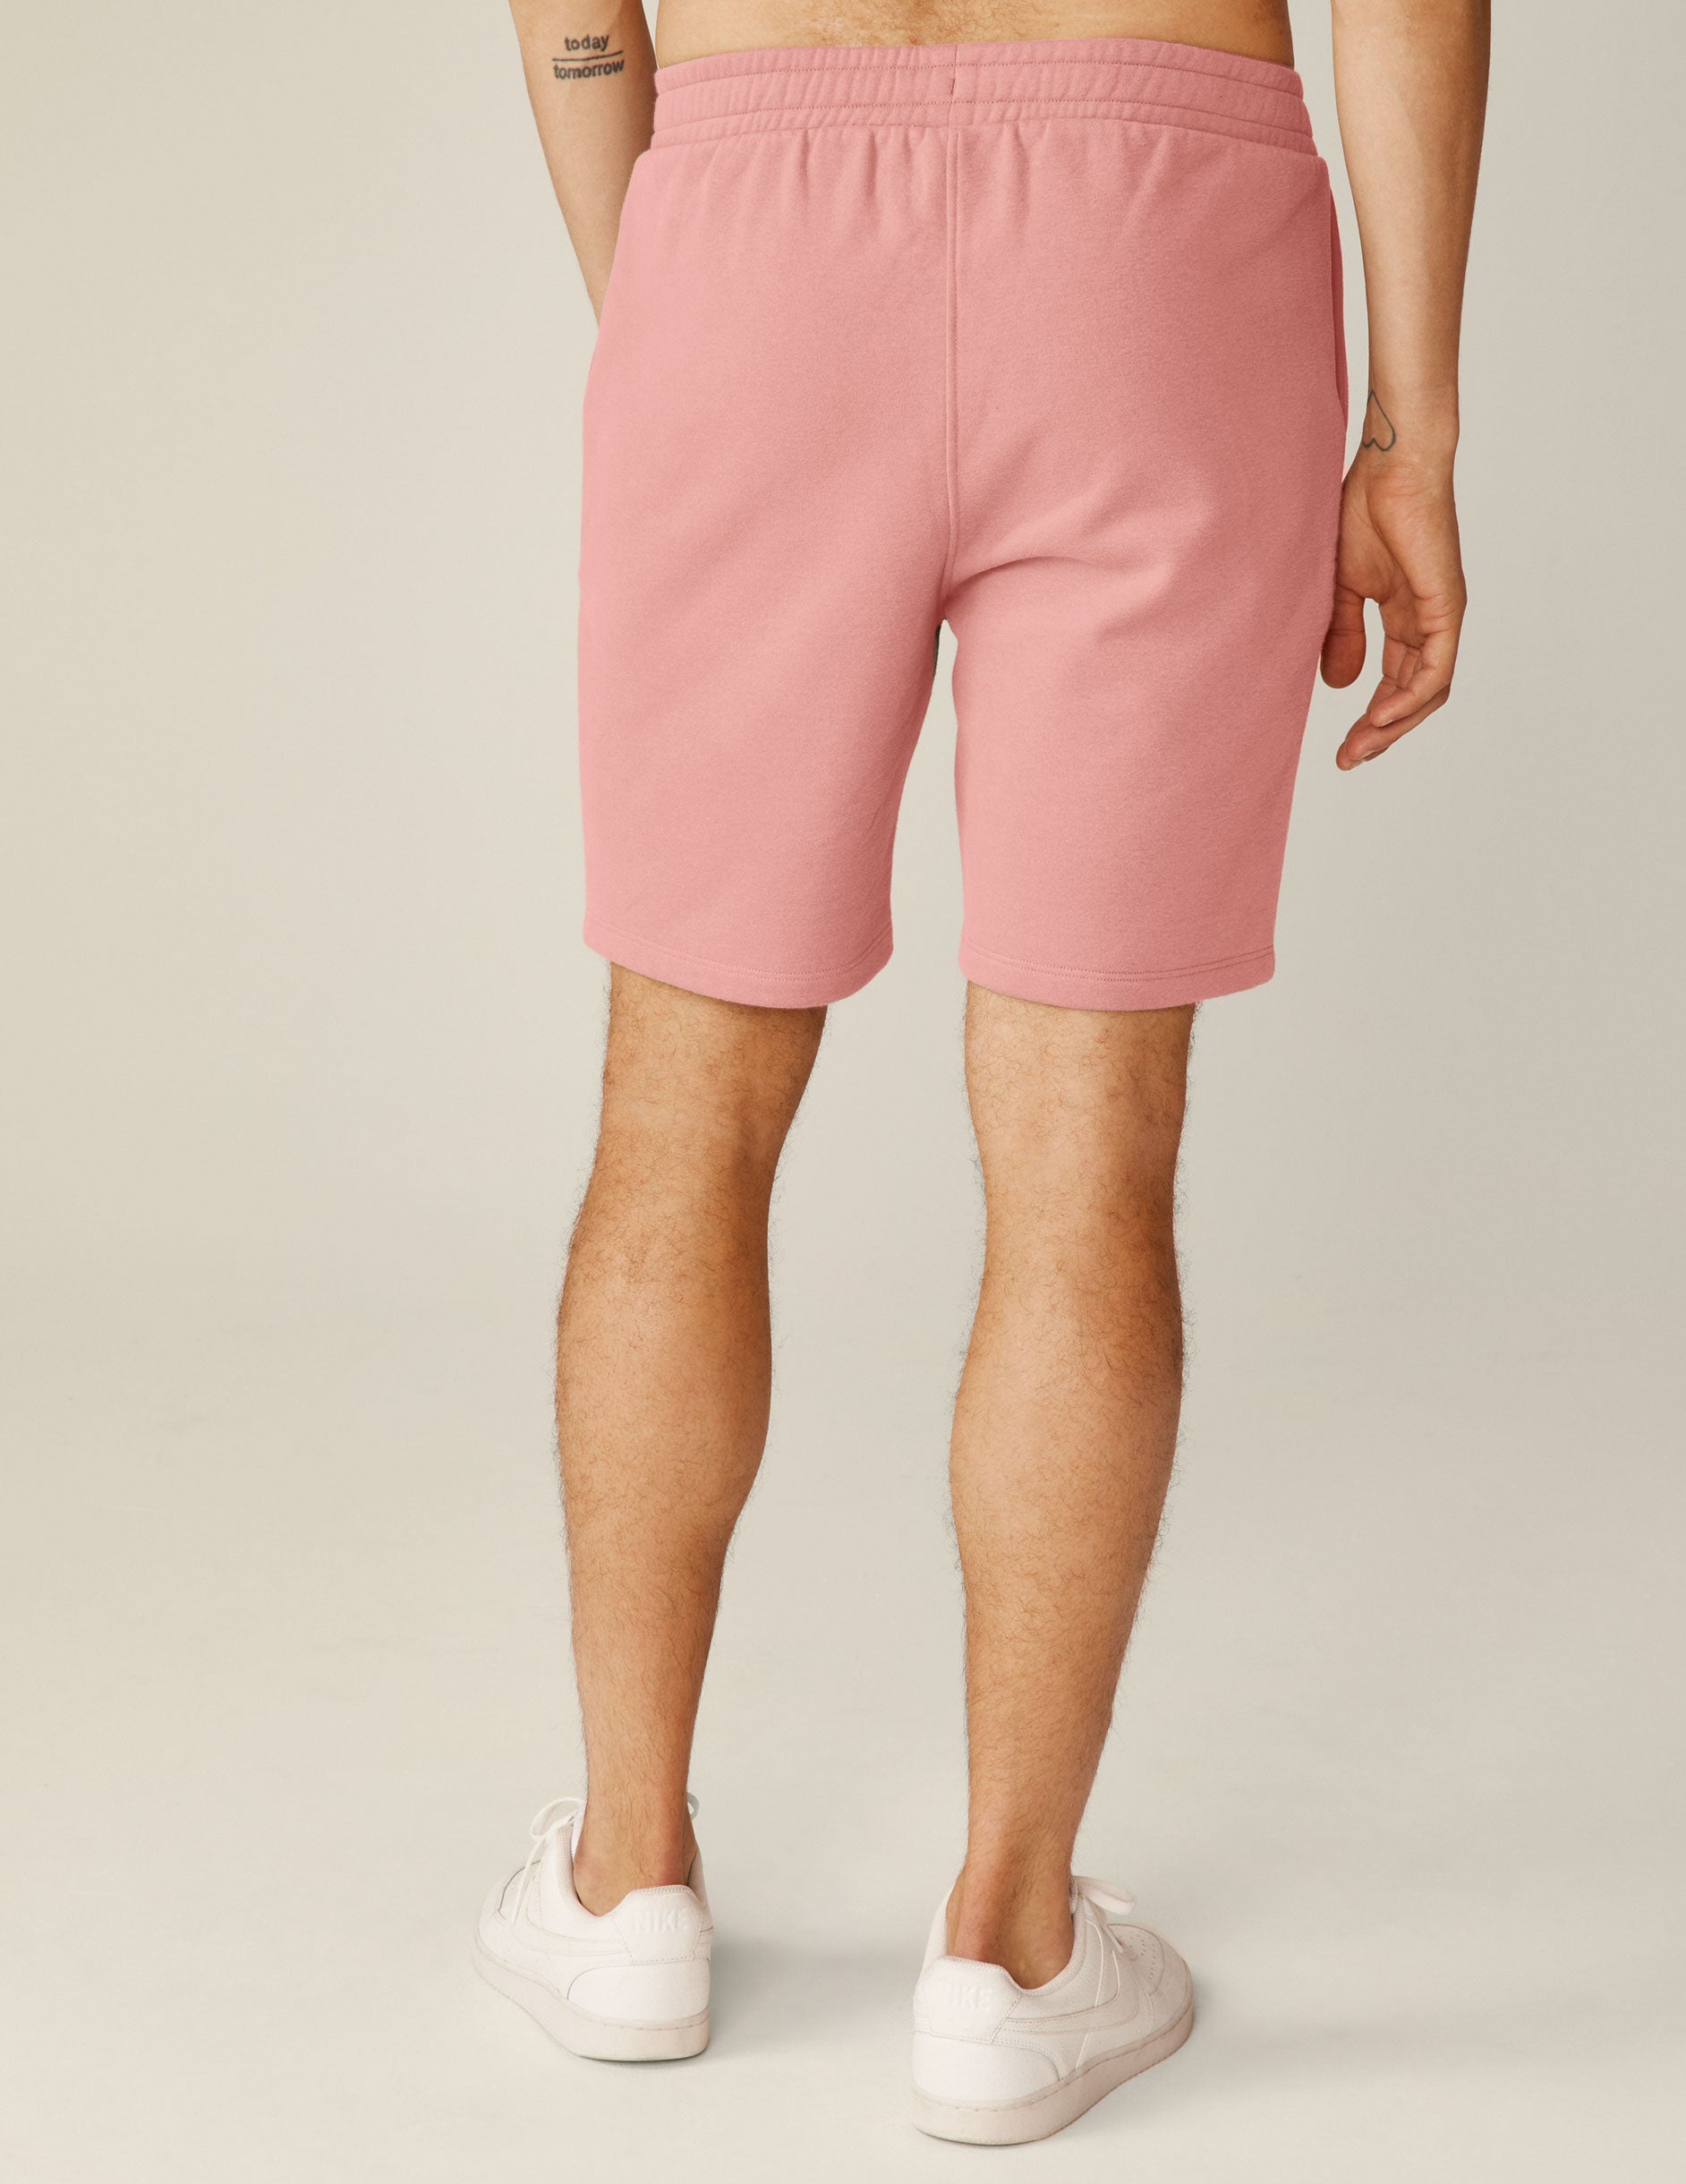 pink men's sweatshorts with pockets. 